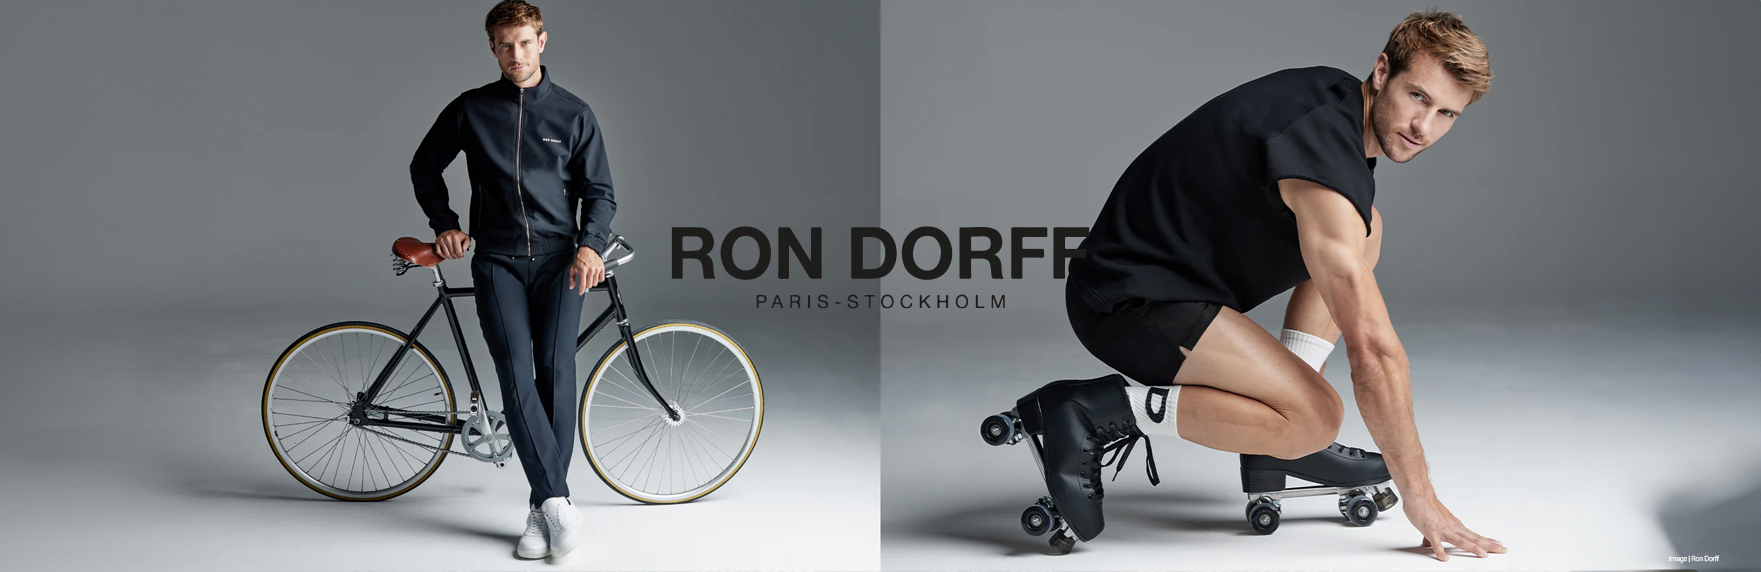 Ron Dorff: French-Swedish sportswear